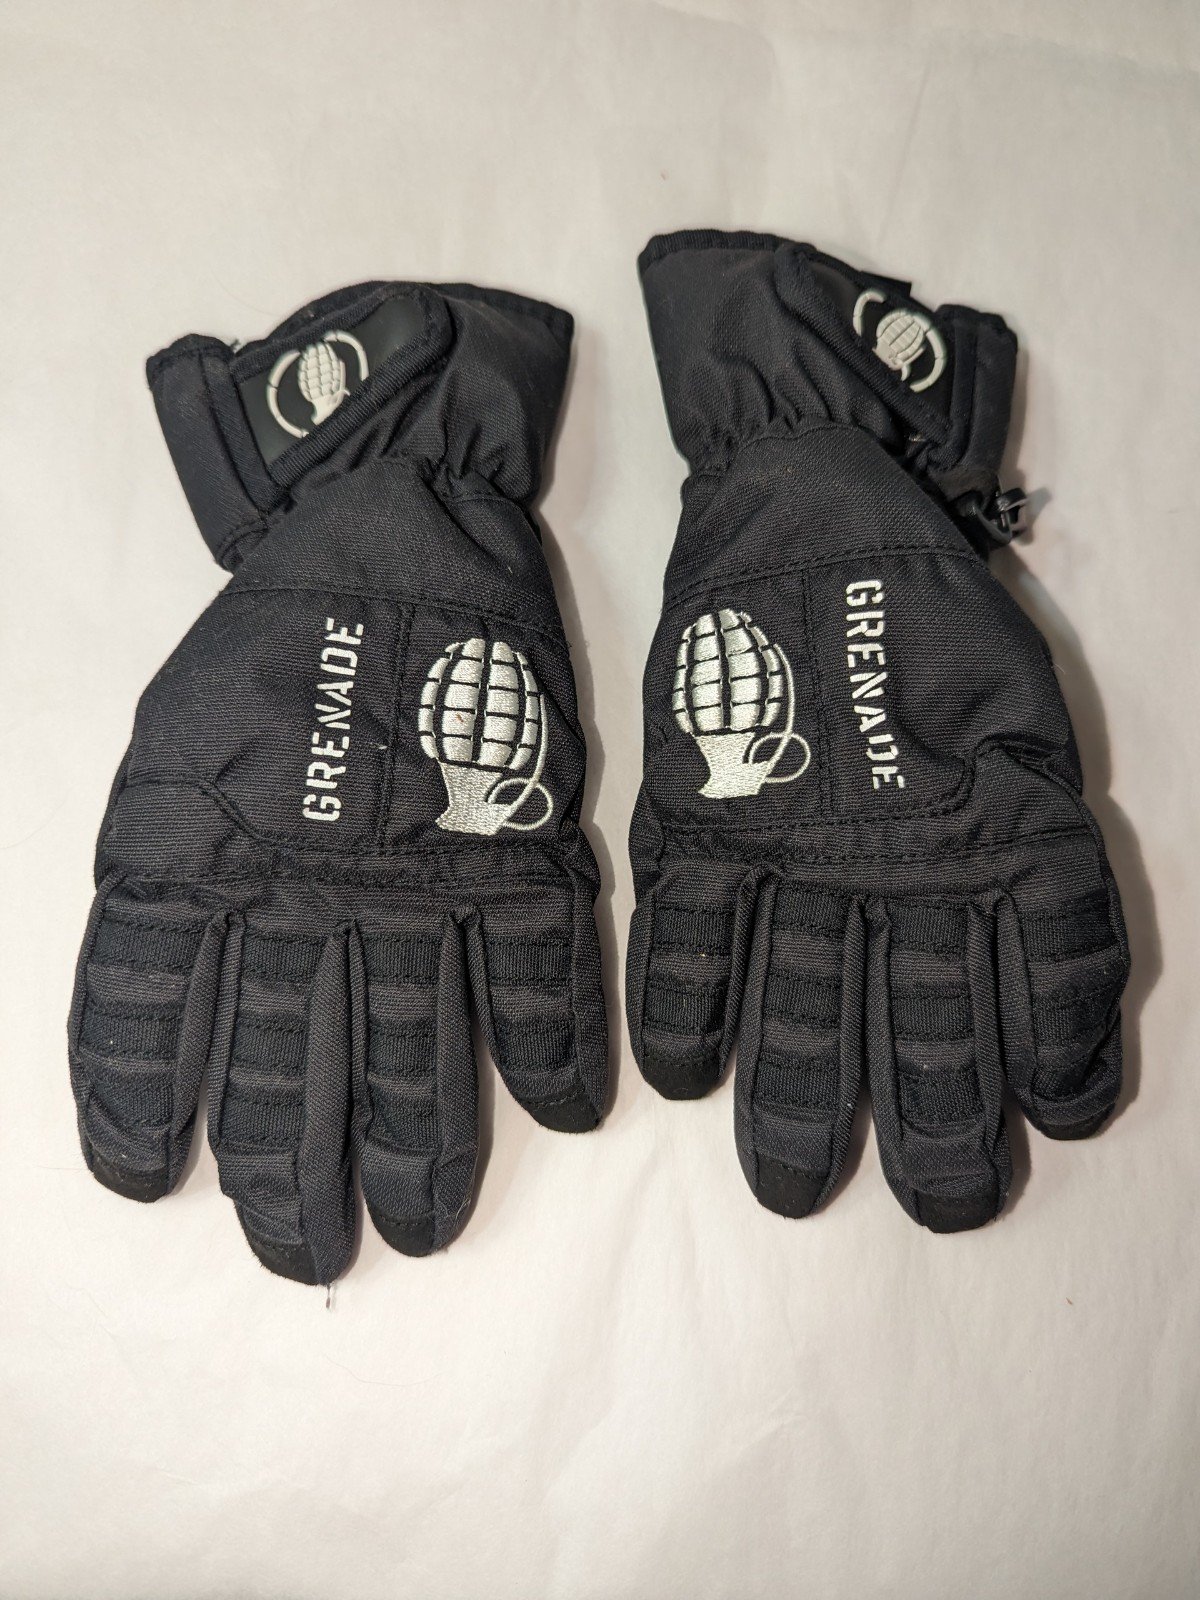 Grenade GLOVES Snowboard Ski Snow Gloves BLACK & WHITE  - Size SMALL YOUTH RwzTW94ui